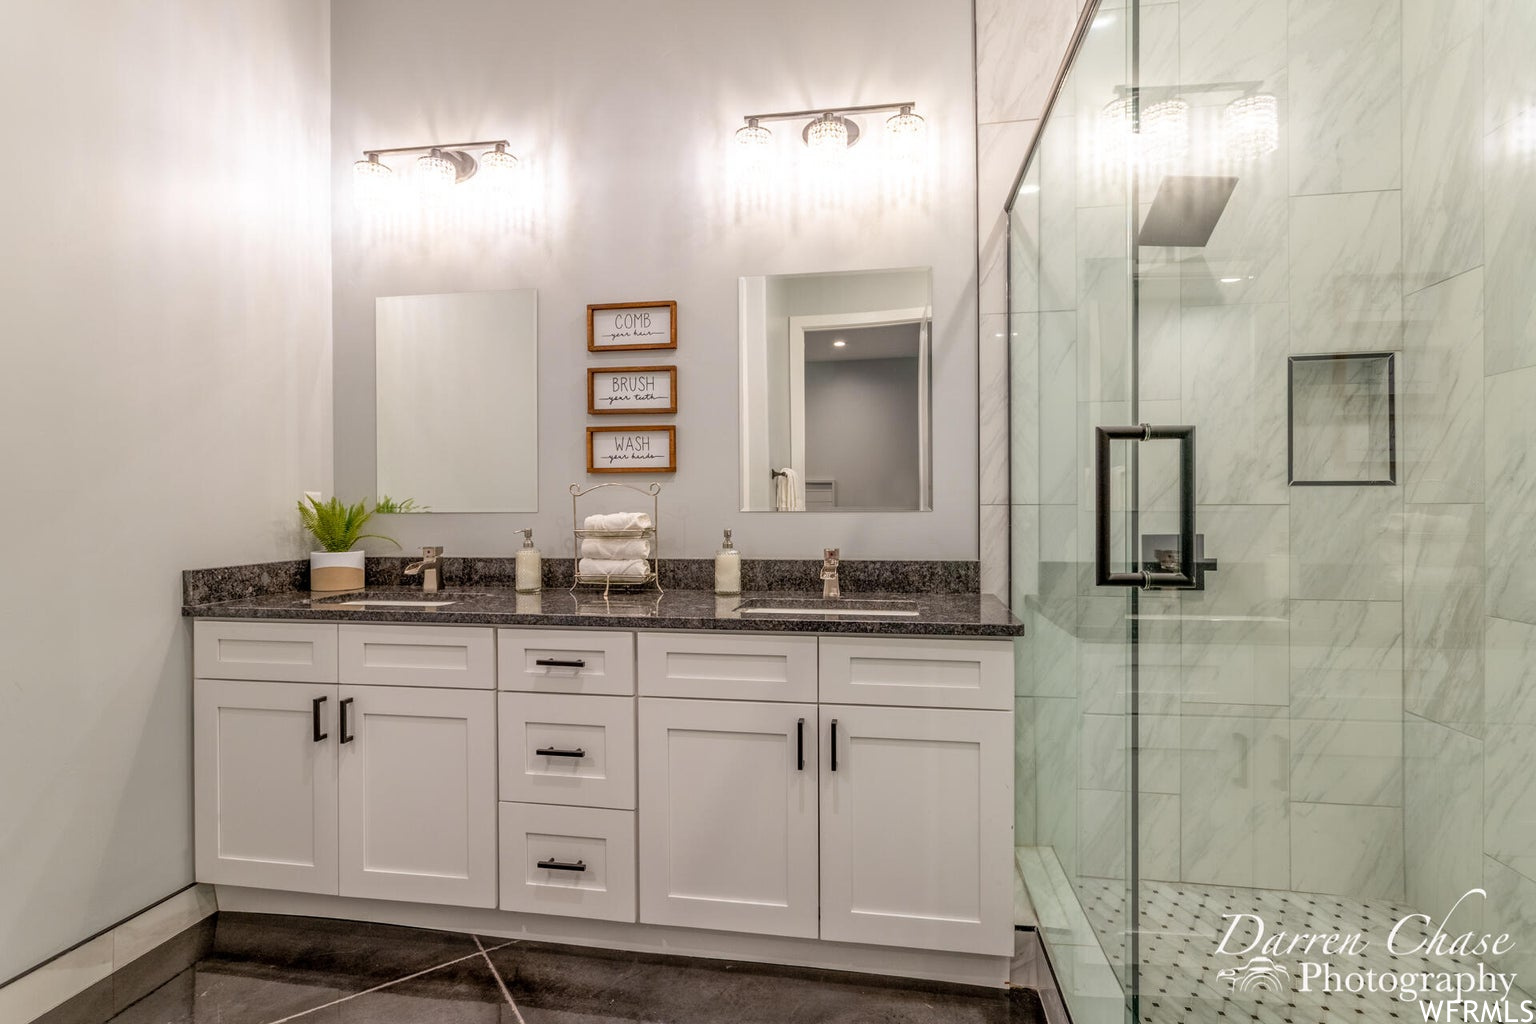 Bathroom featuring tile flooring, shower cabin, double vanities, and mirror